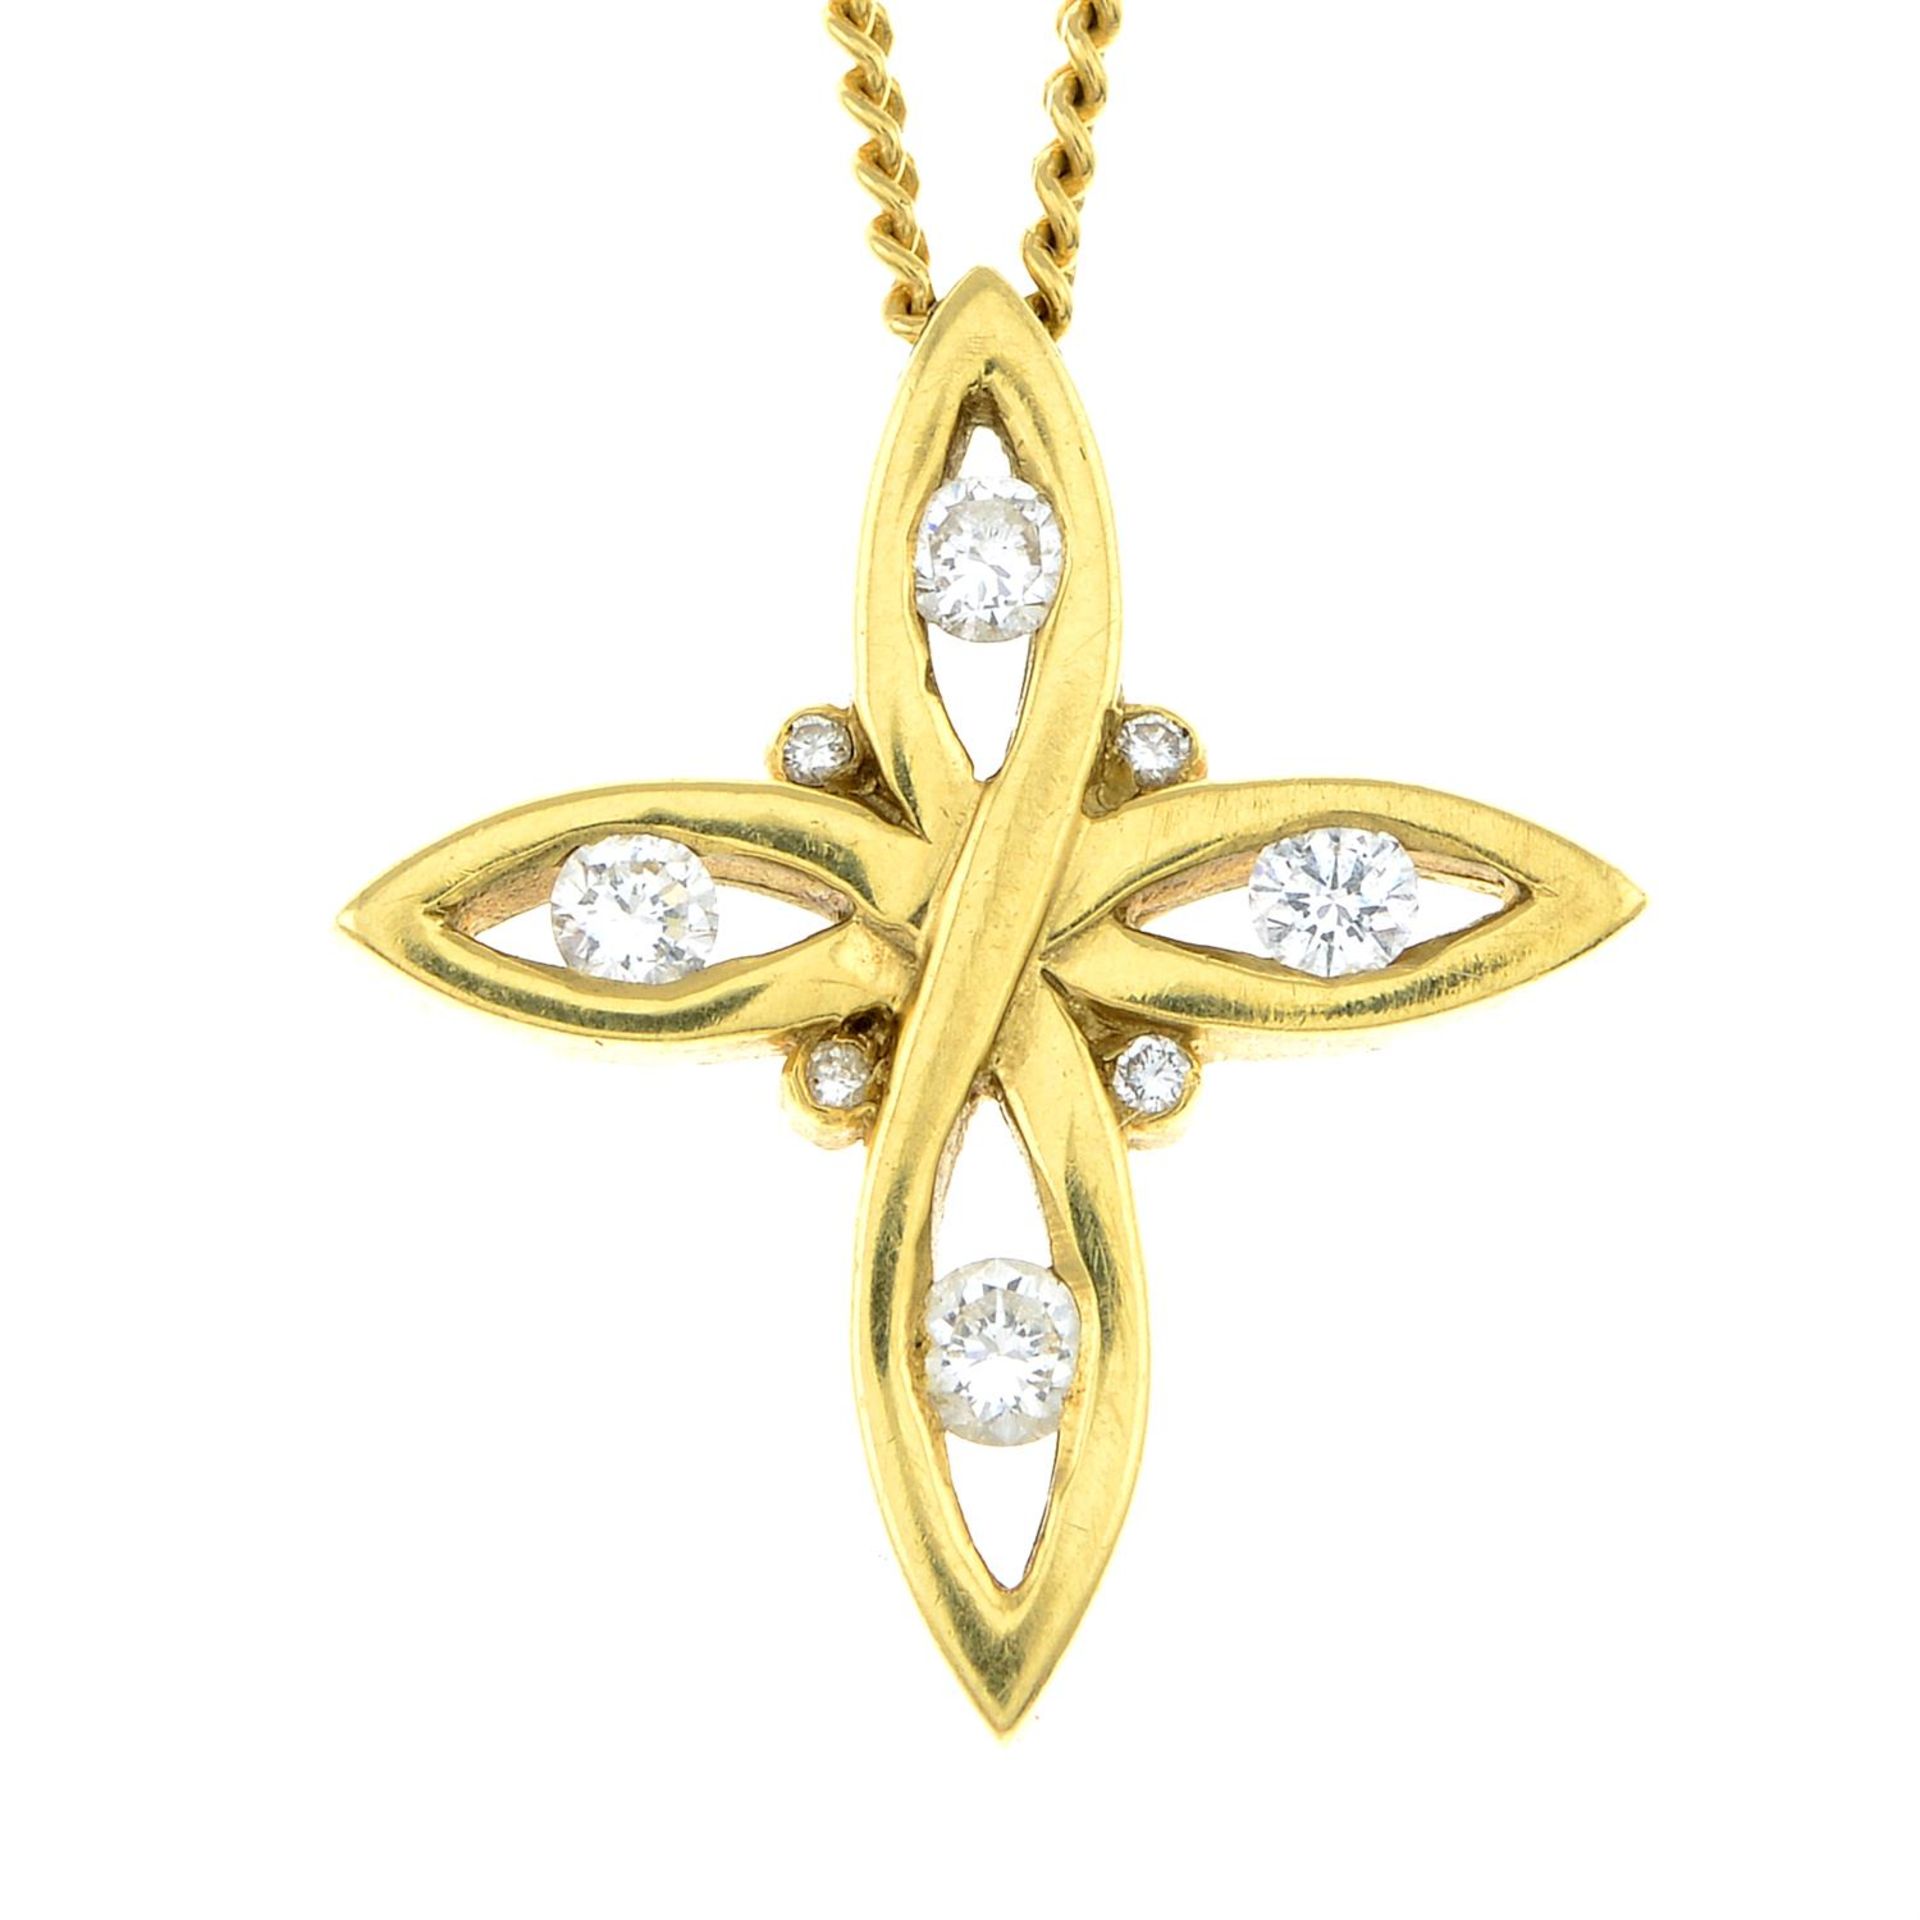 An 18ct gold brilliant-cut diamond abstract cross pendant, on integral chain.